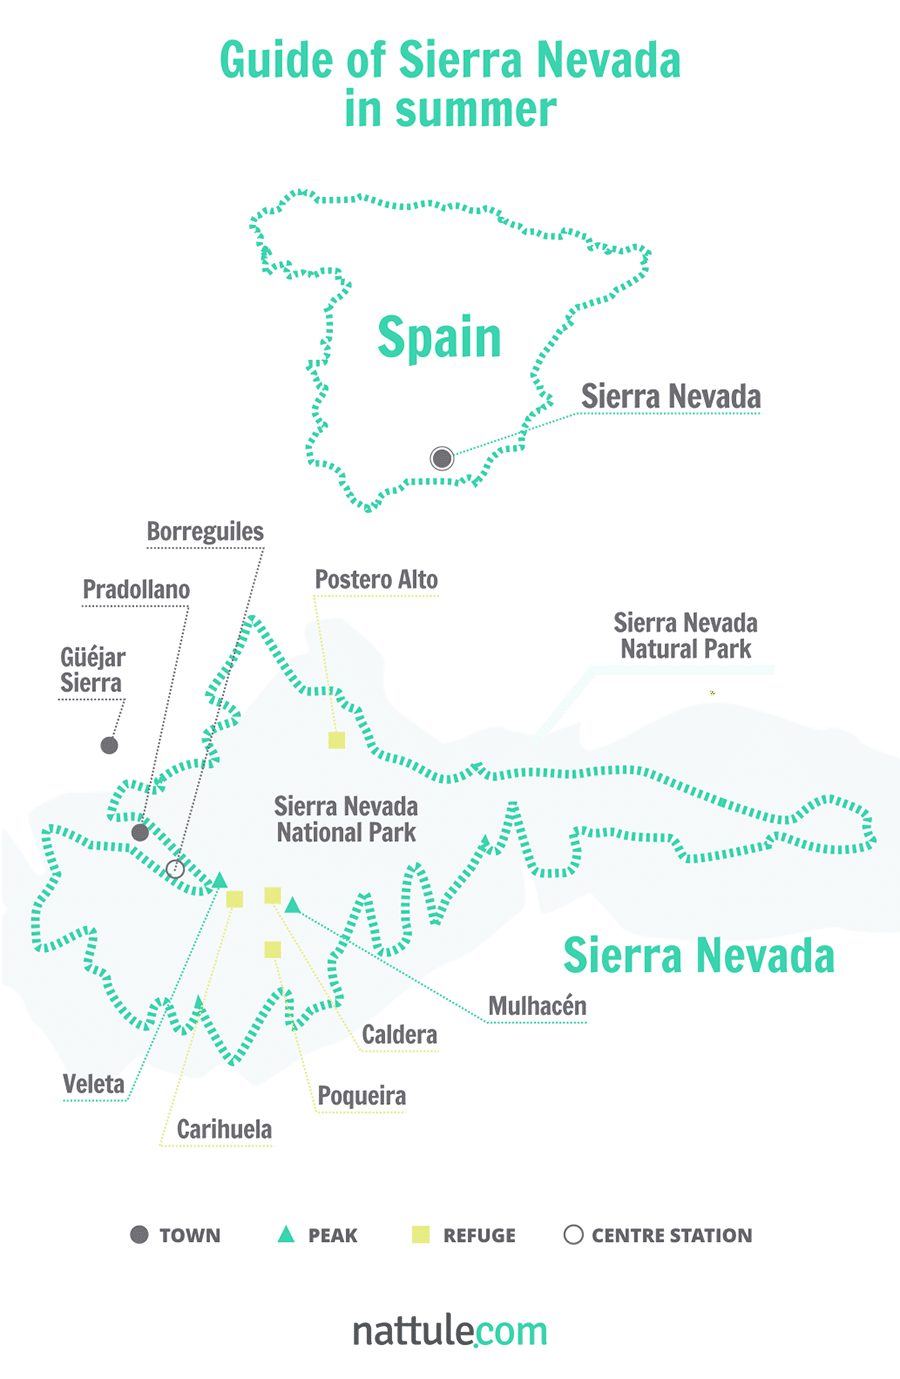 Guide to Sierra Nevada in summer